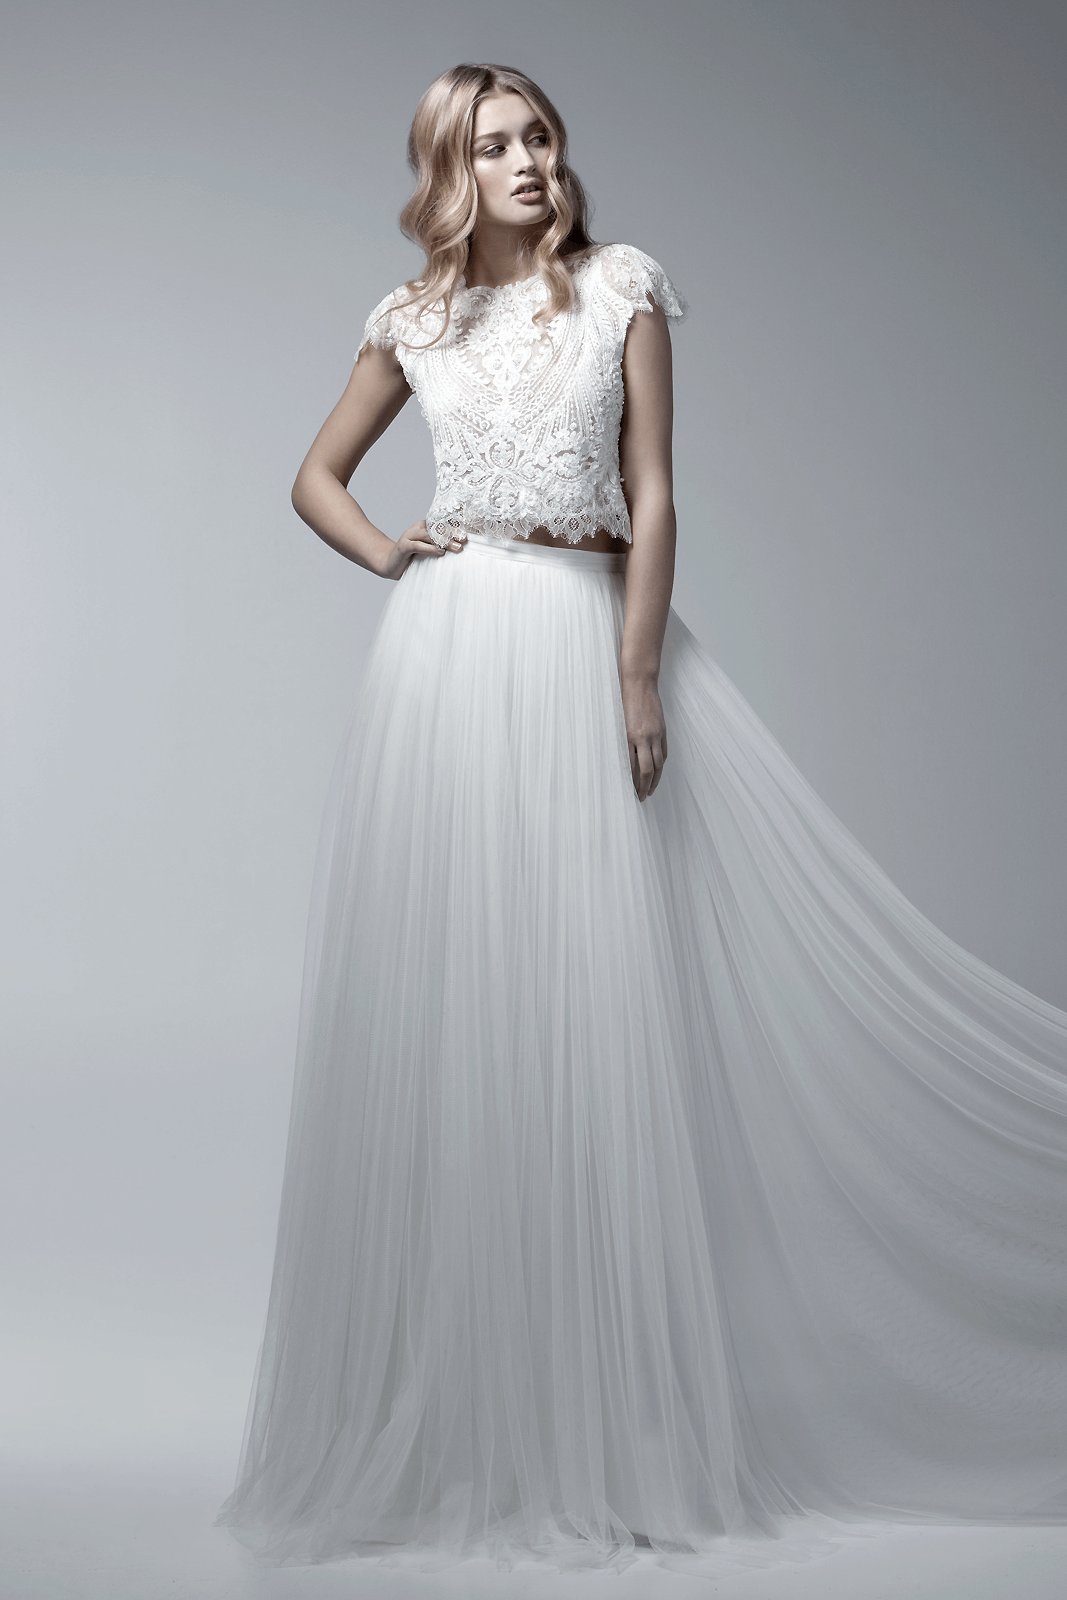 couture stuen ekslusive brudekjoler designer brudekjoler angelika dluzen bridal skirt collection